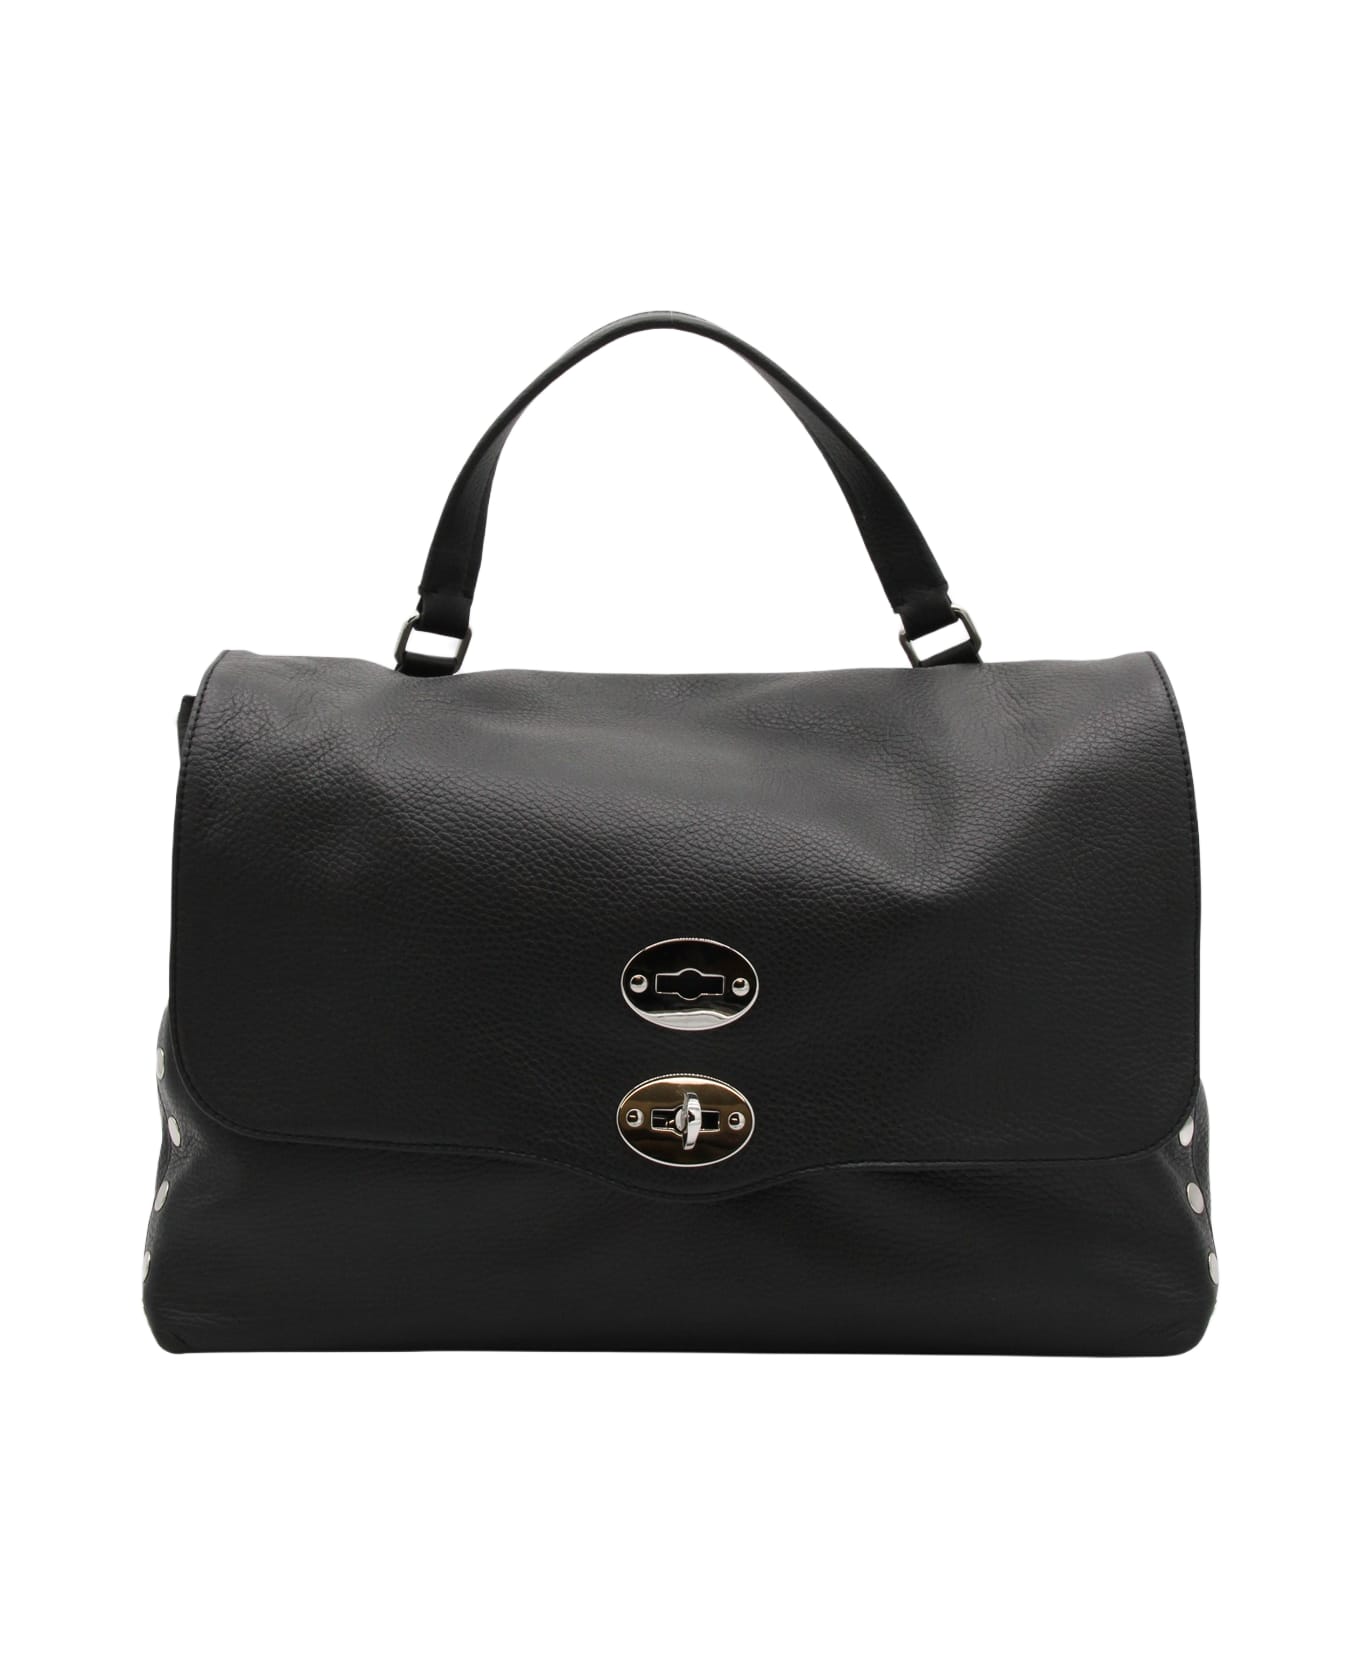 Zanellato Black Leather Postina Daily Medium Top Handle Bag - Black トートバッグ